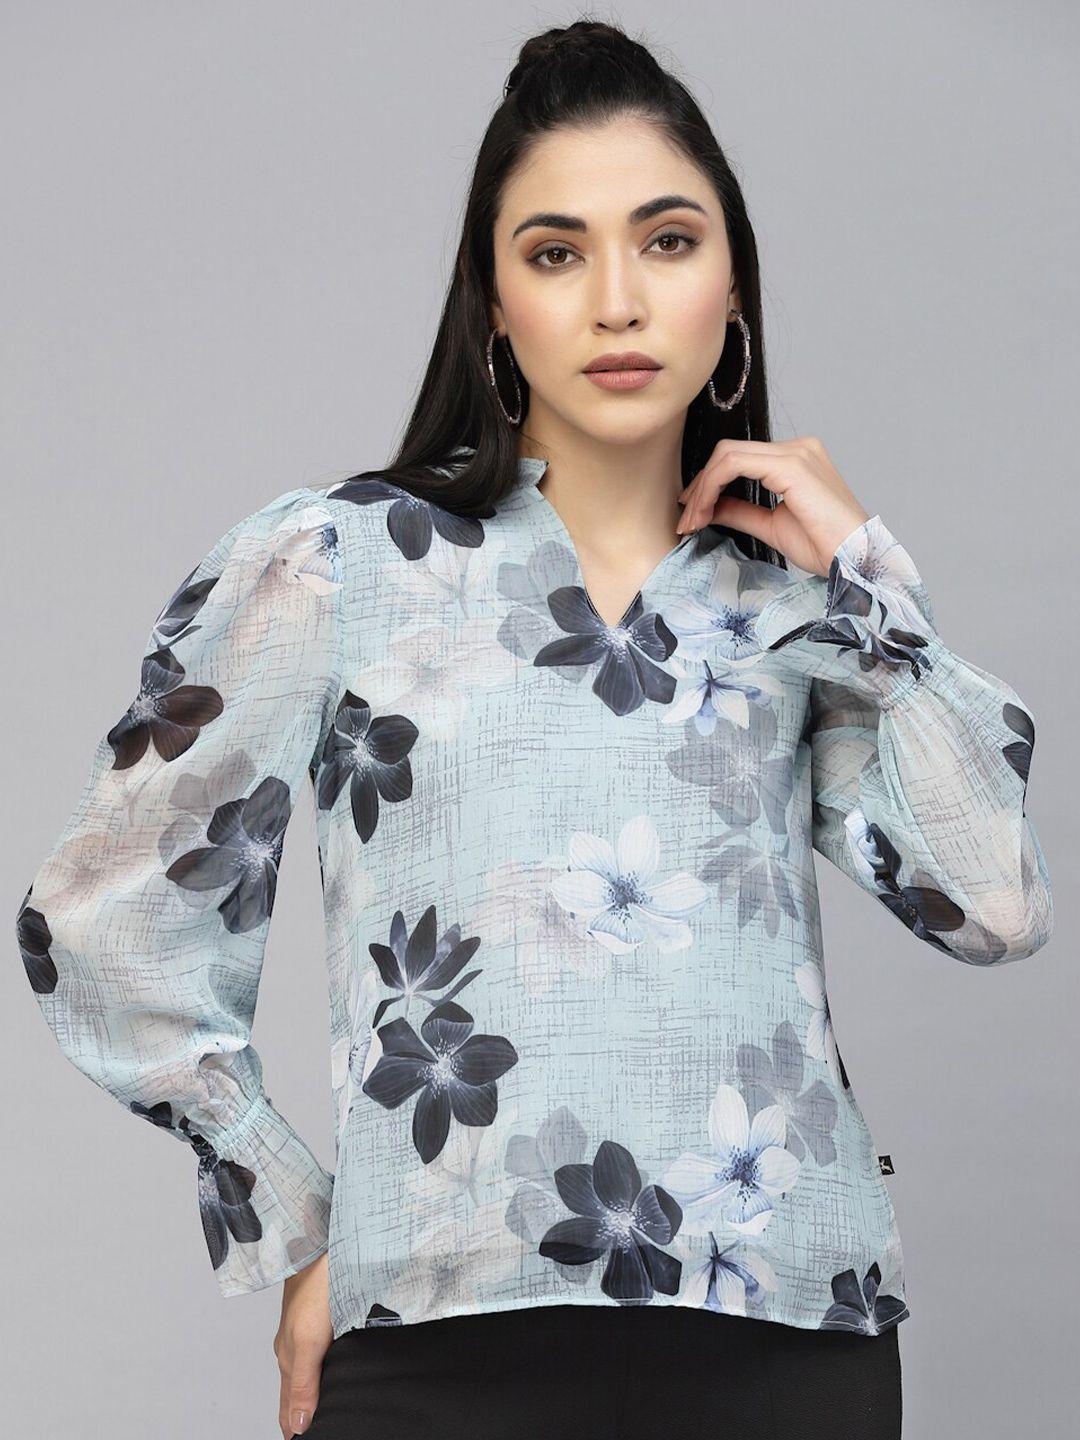 valbone floral printed shirt style top